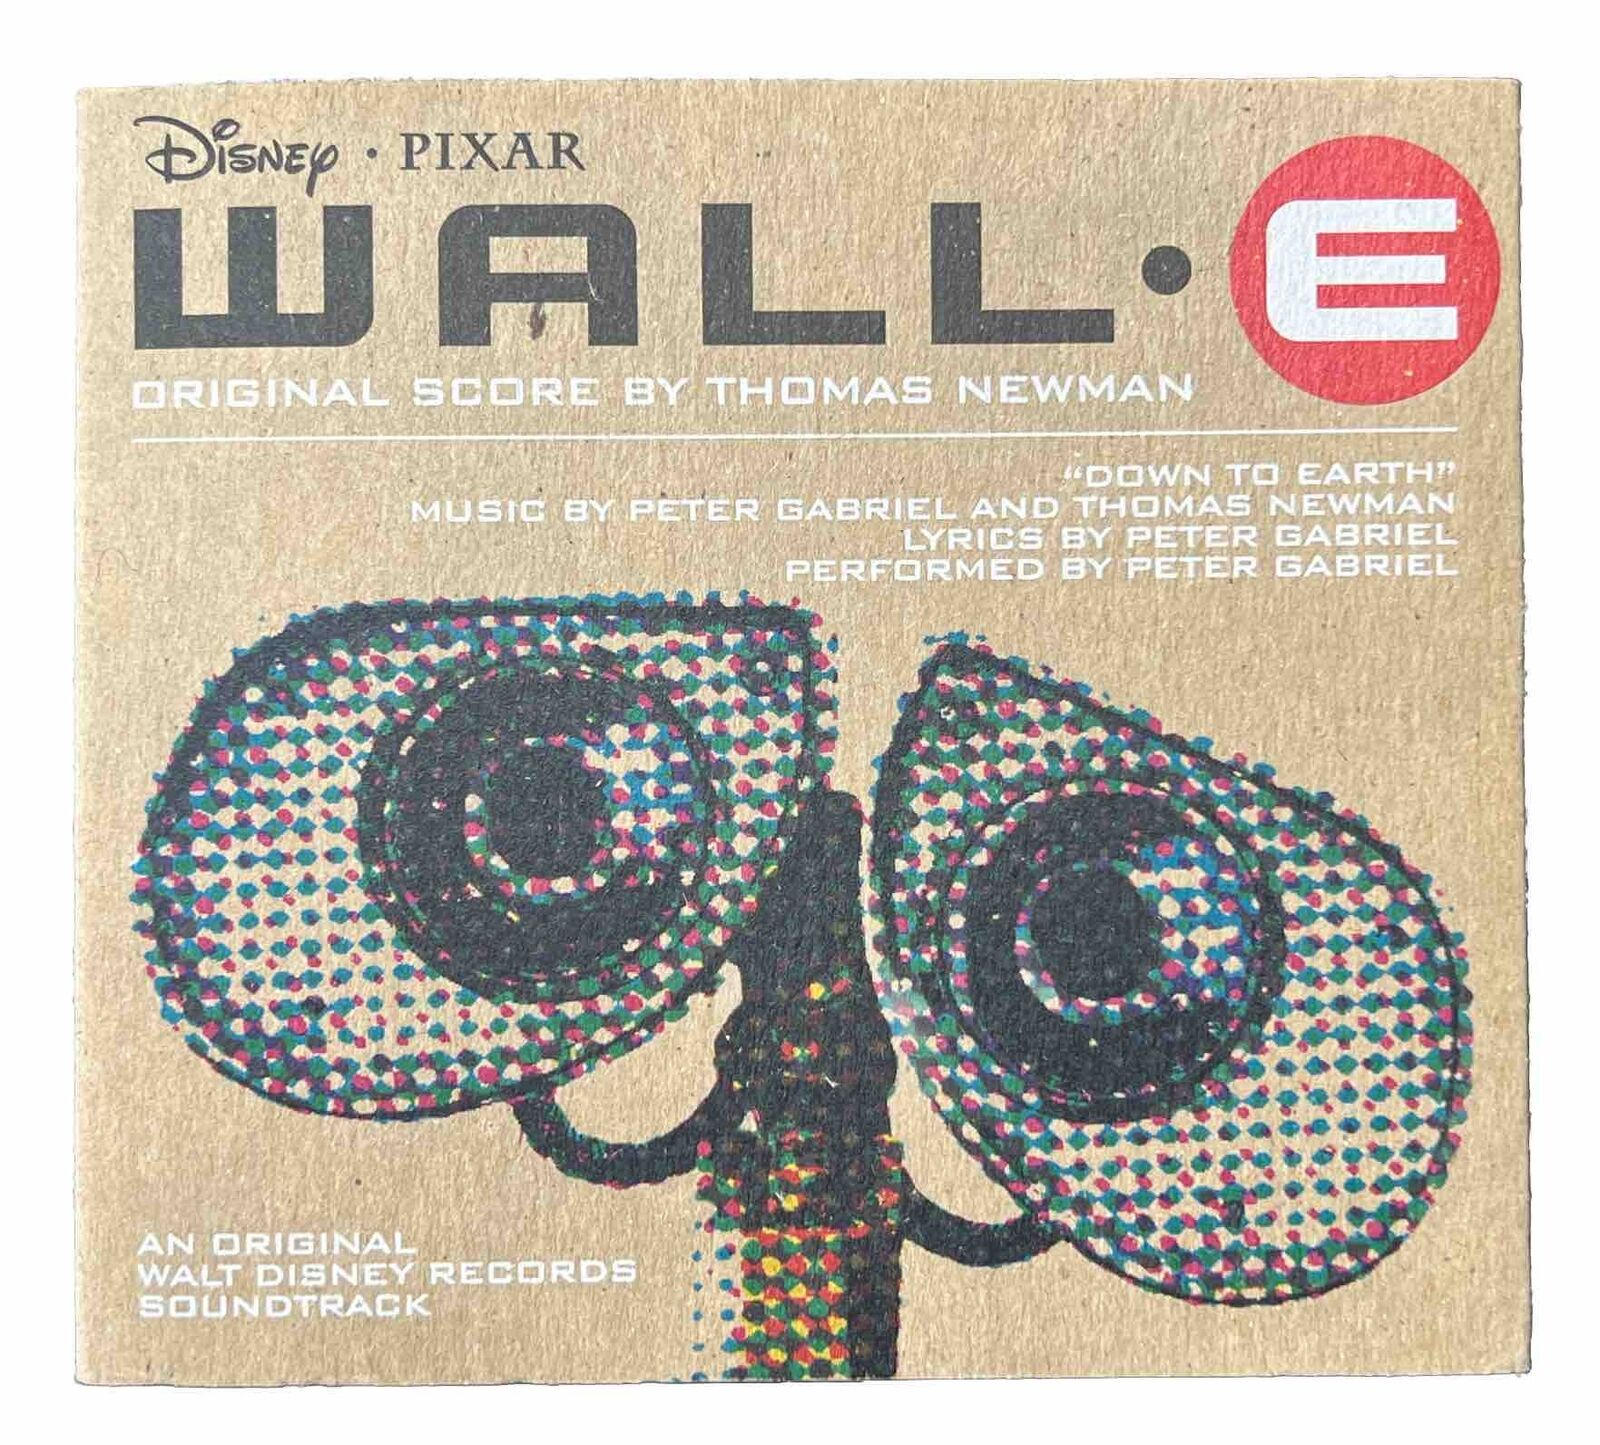 WALL-E [Original Score] by Thomas Newman (CD, Jun-2008, Disney, Pixar)